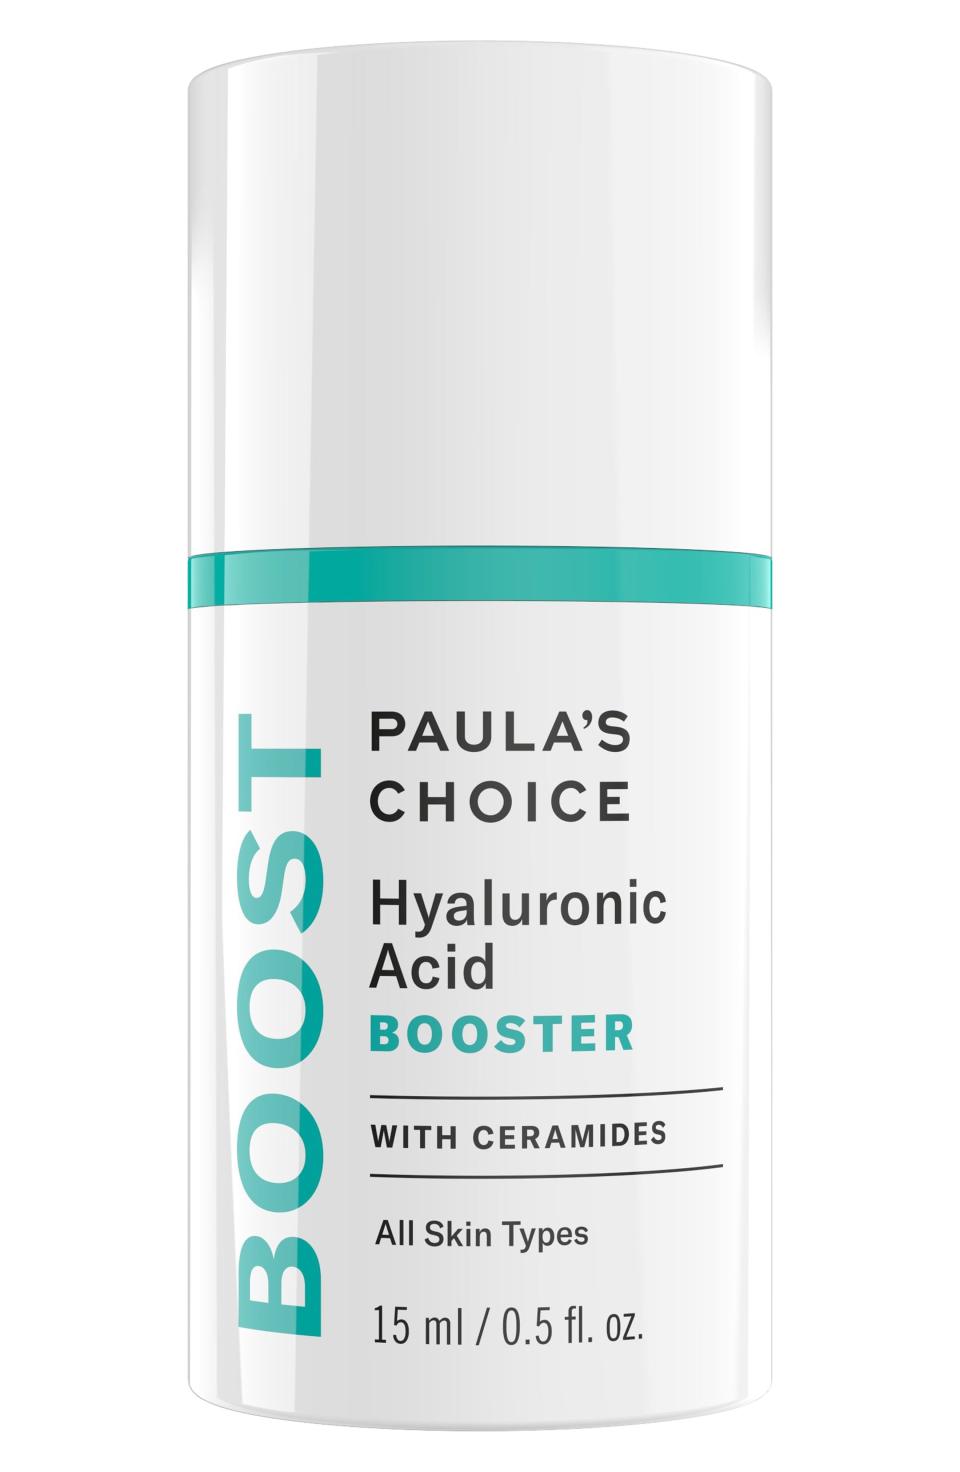 Resist Hyaluronic Acid Booster